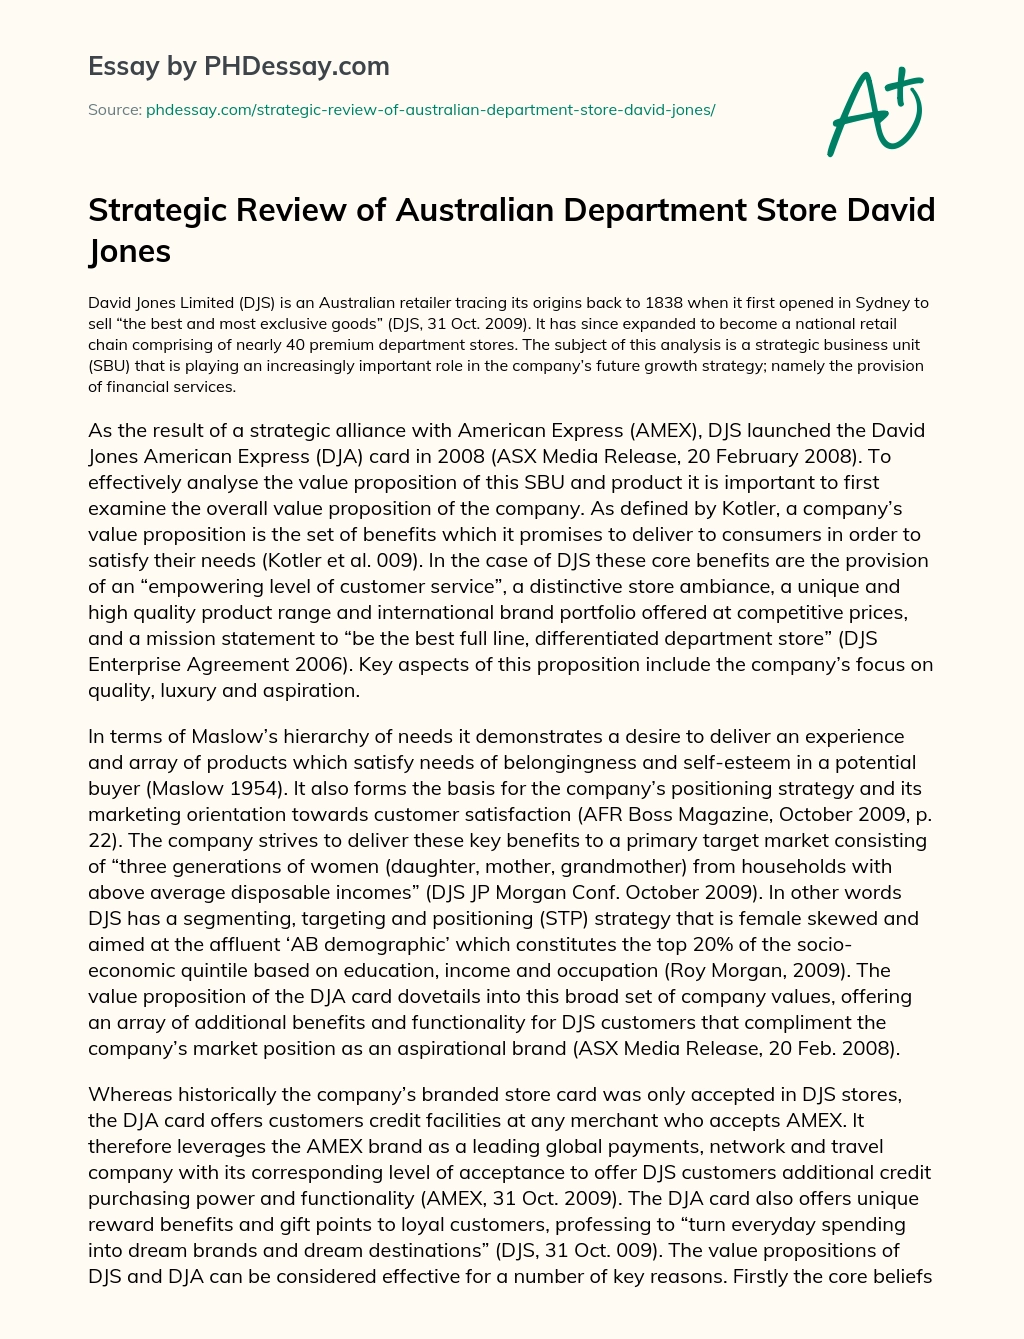 Strategic Review of Australian Department Store David Jones essay